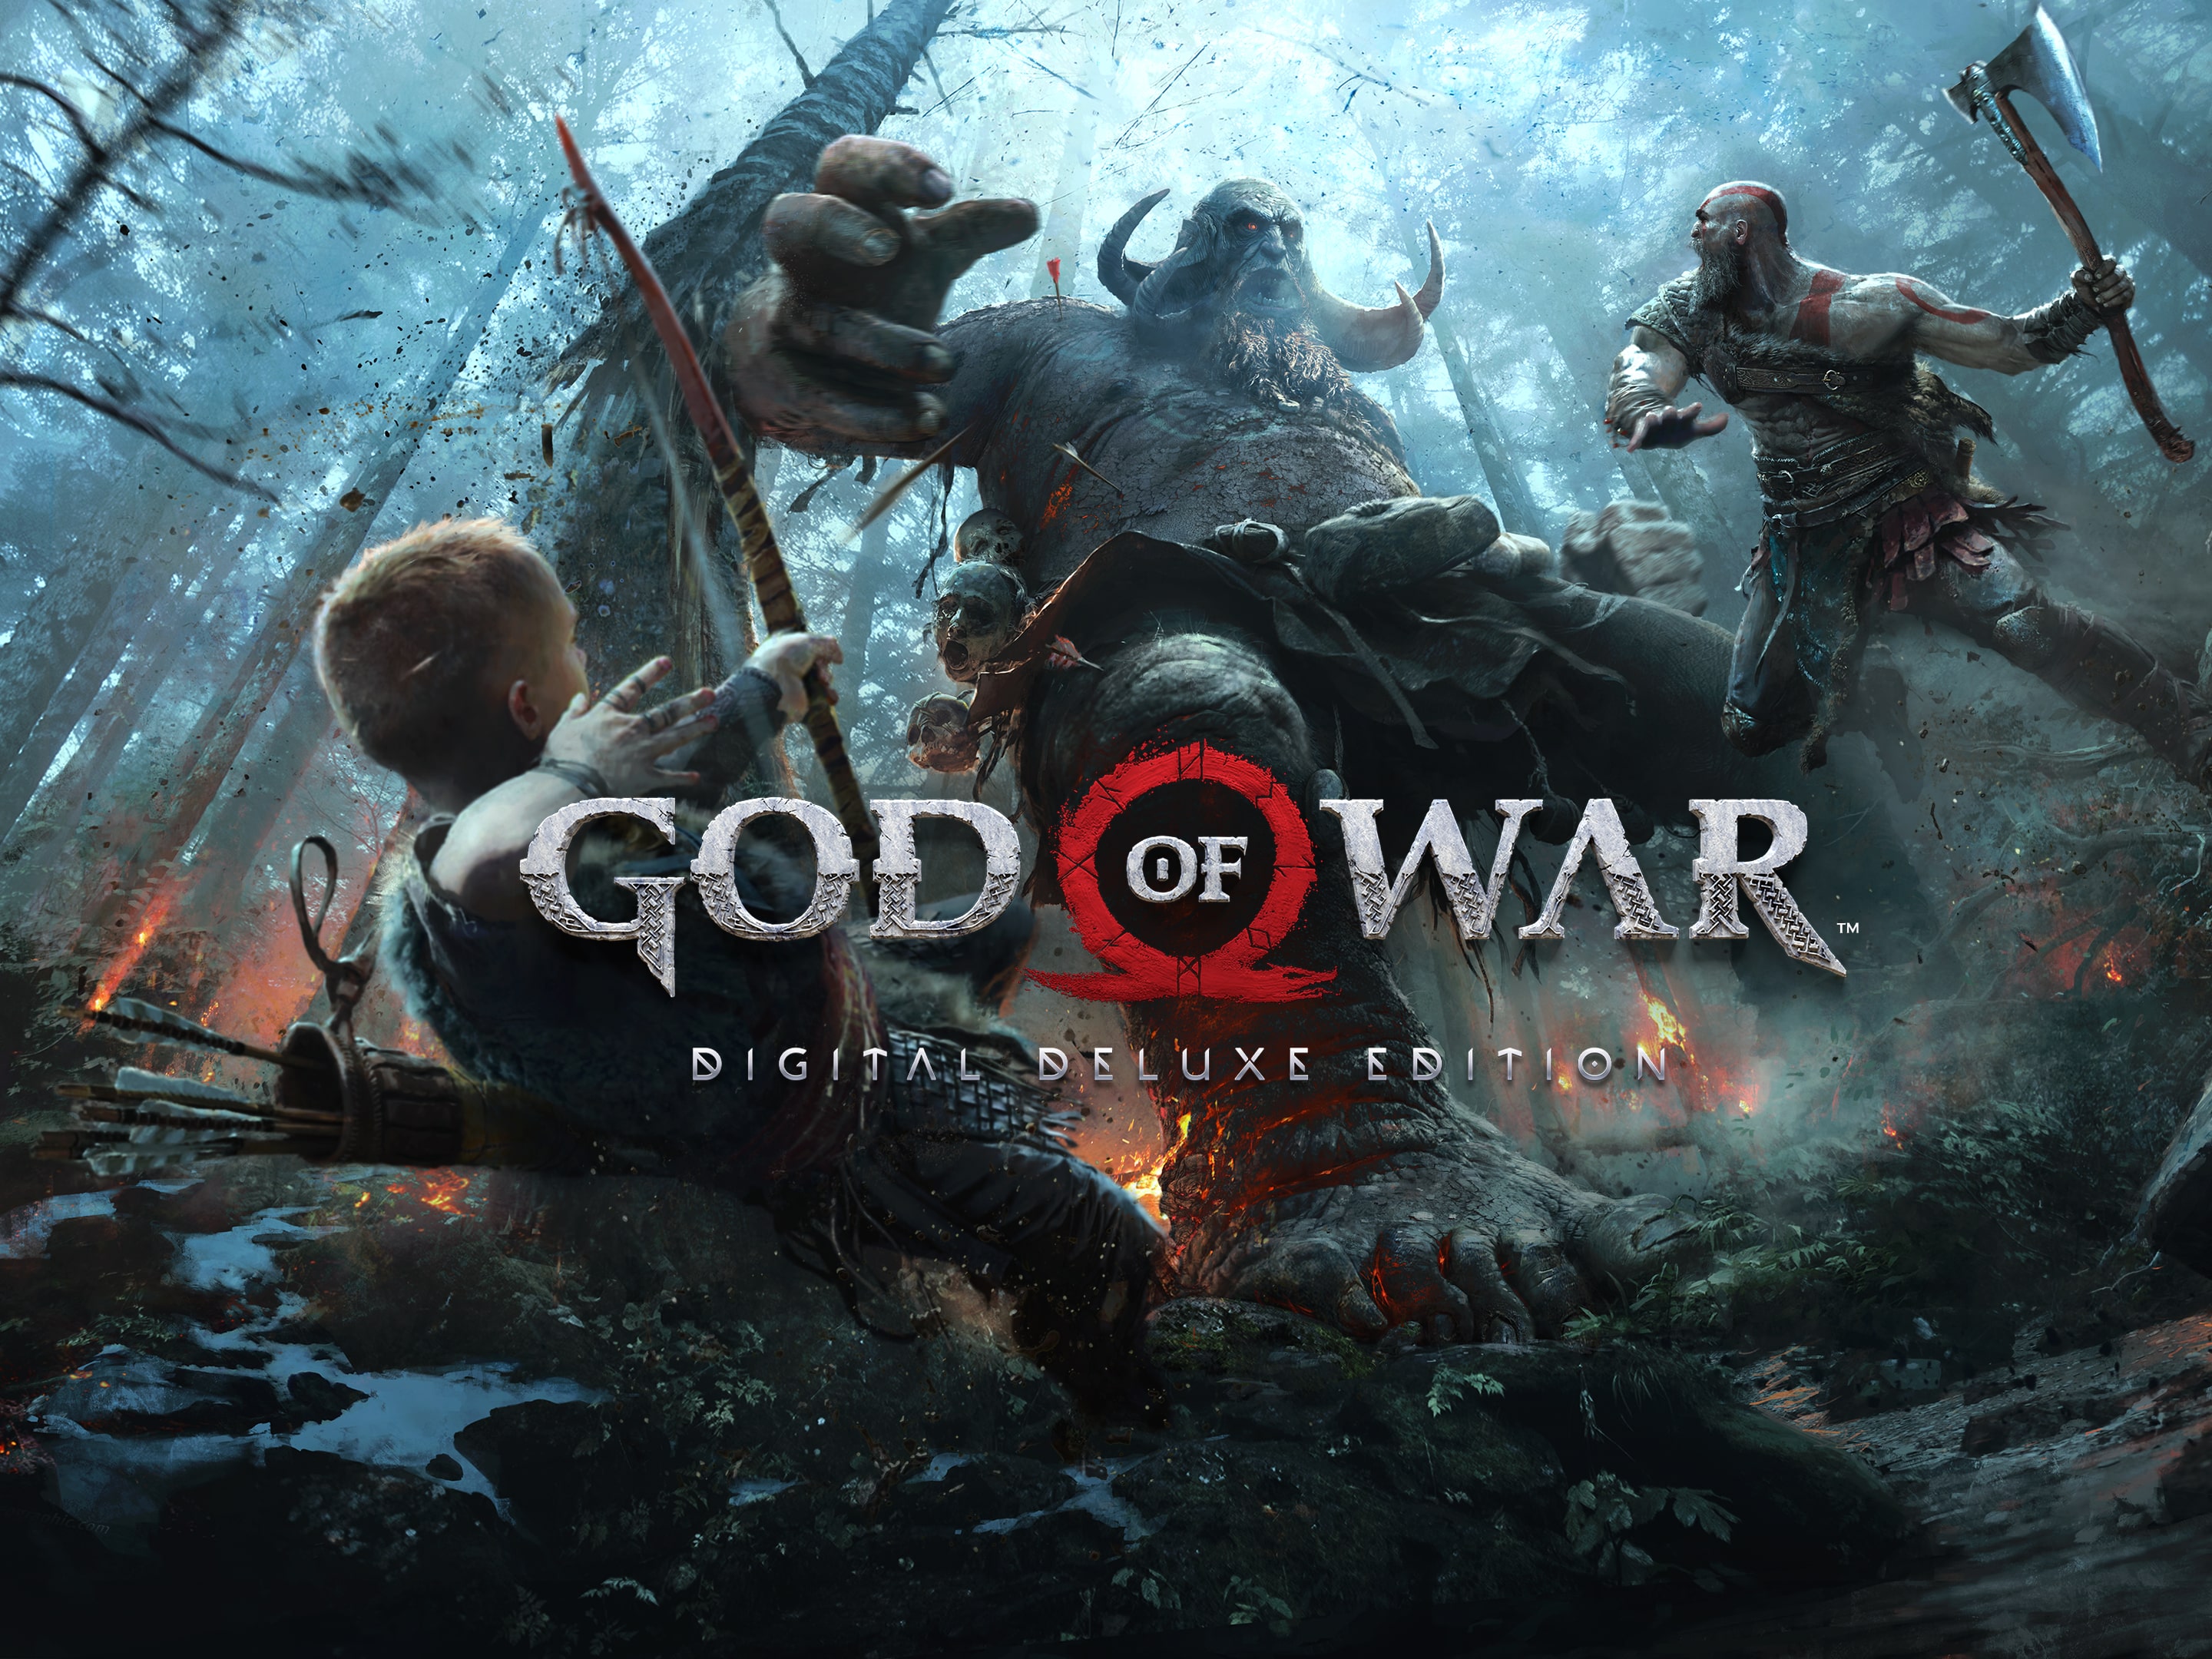 god of war price ps4